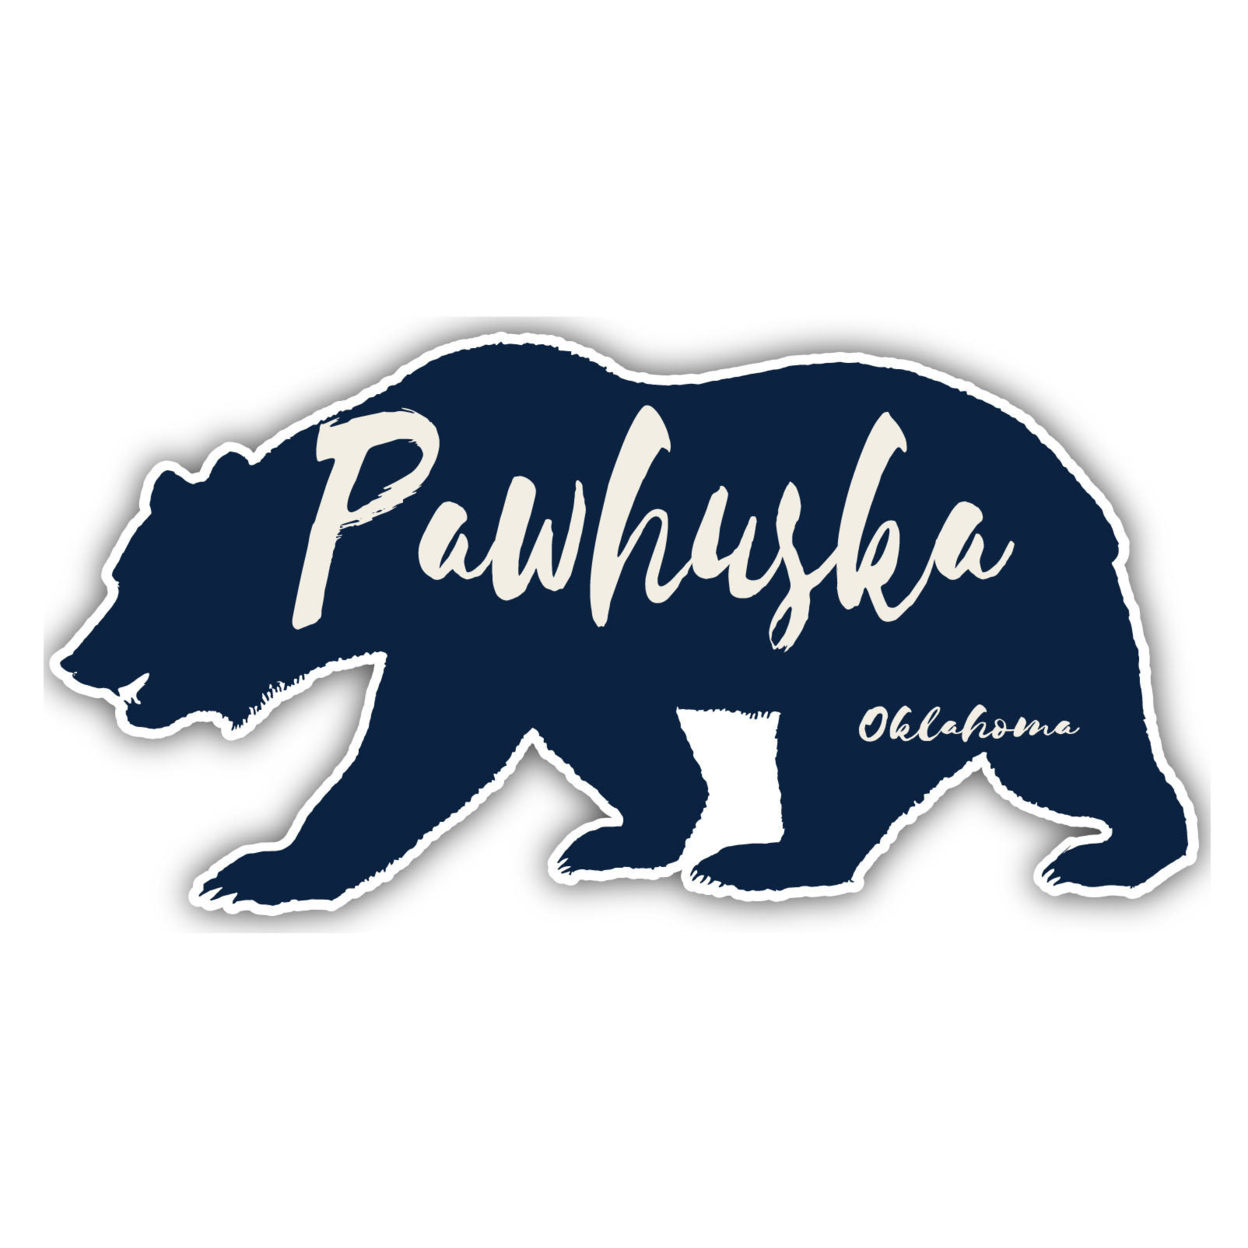 Pawhuska Oklahoma Souvenir Decorative Stickers (Choose Theme And Size) - Single Unit, 2-Inch, Bear